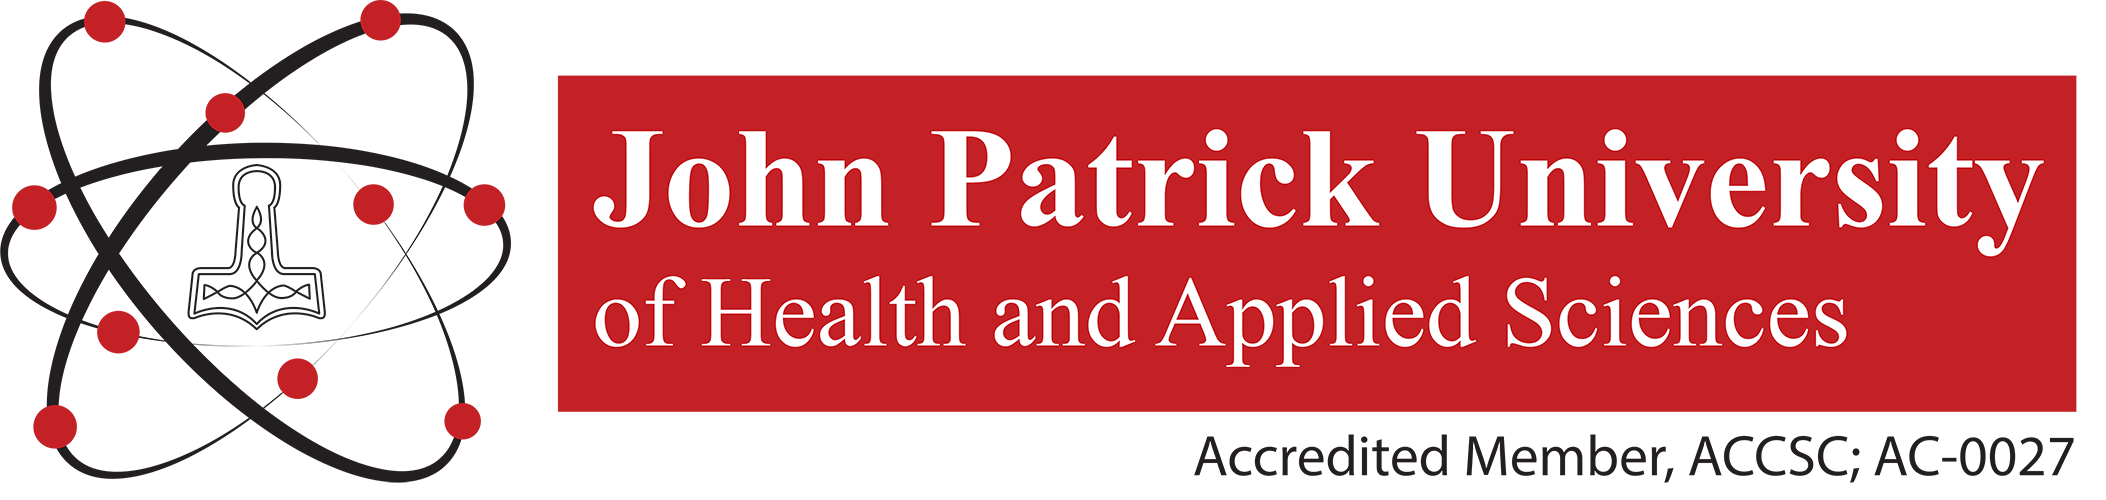 John Patrick University of Health and Applied Sciences logo